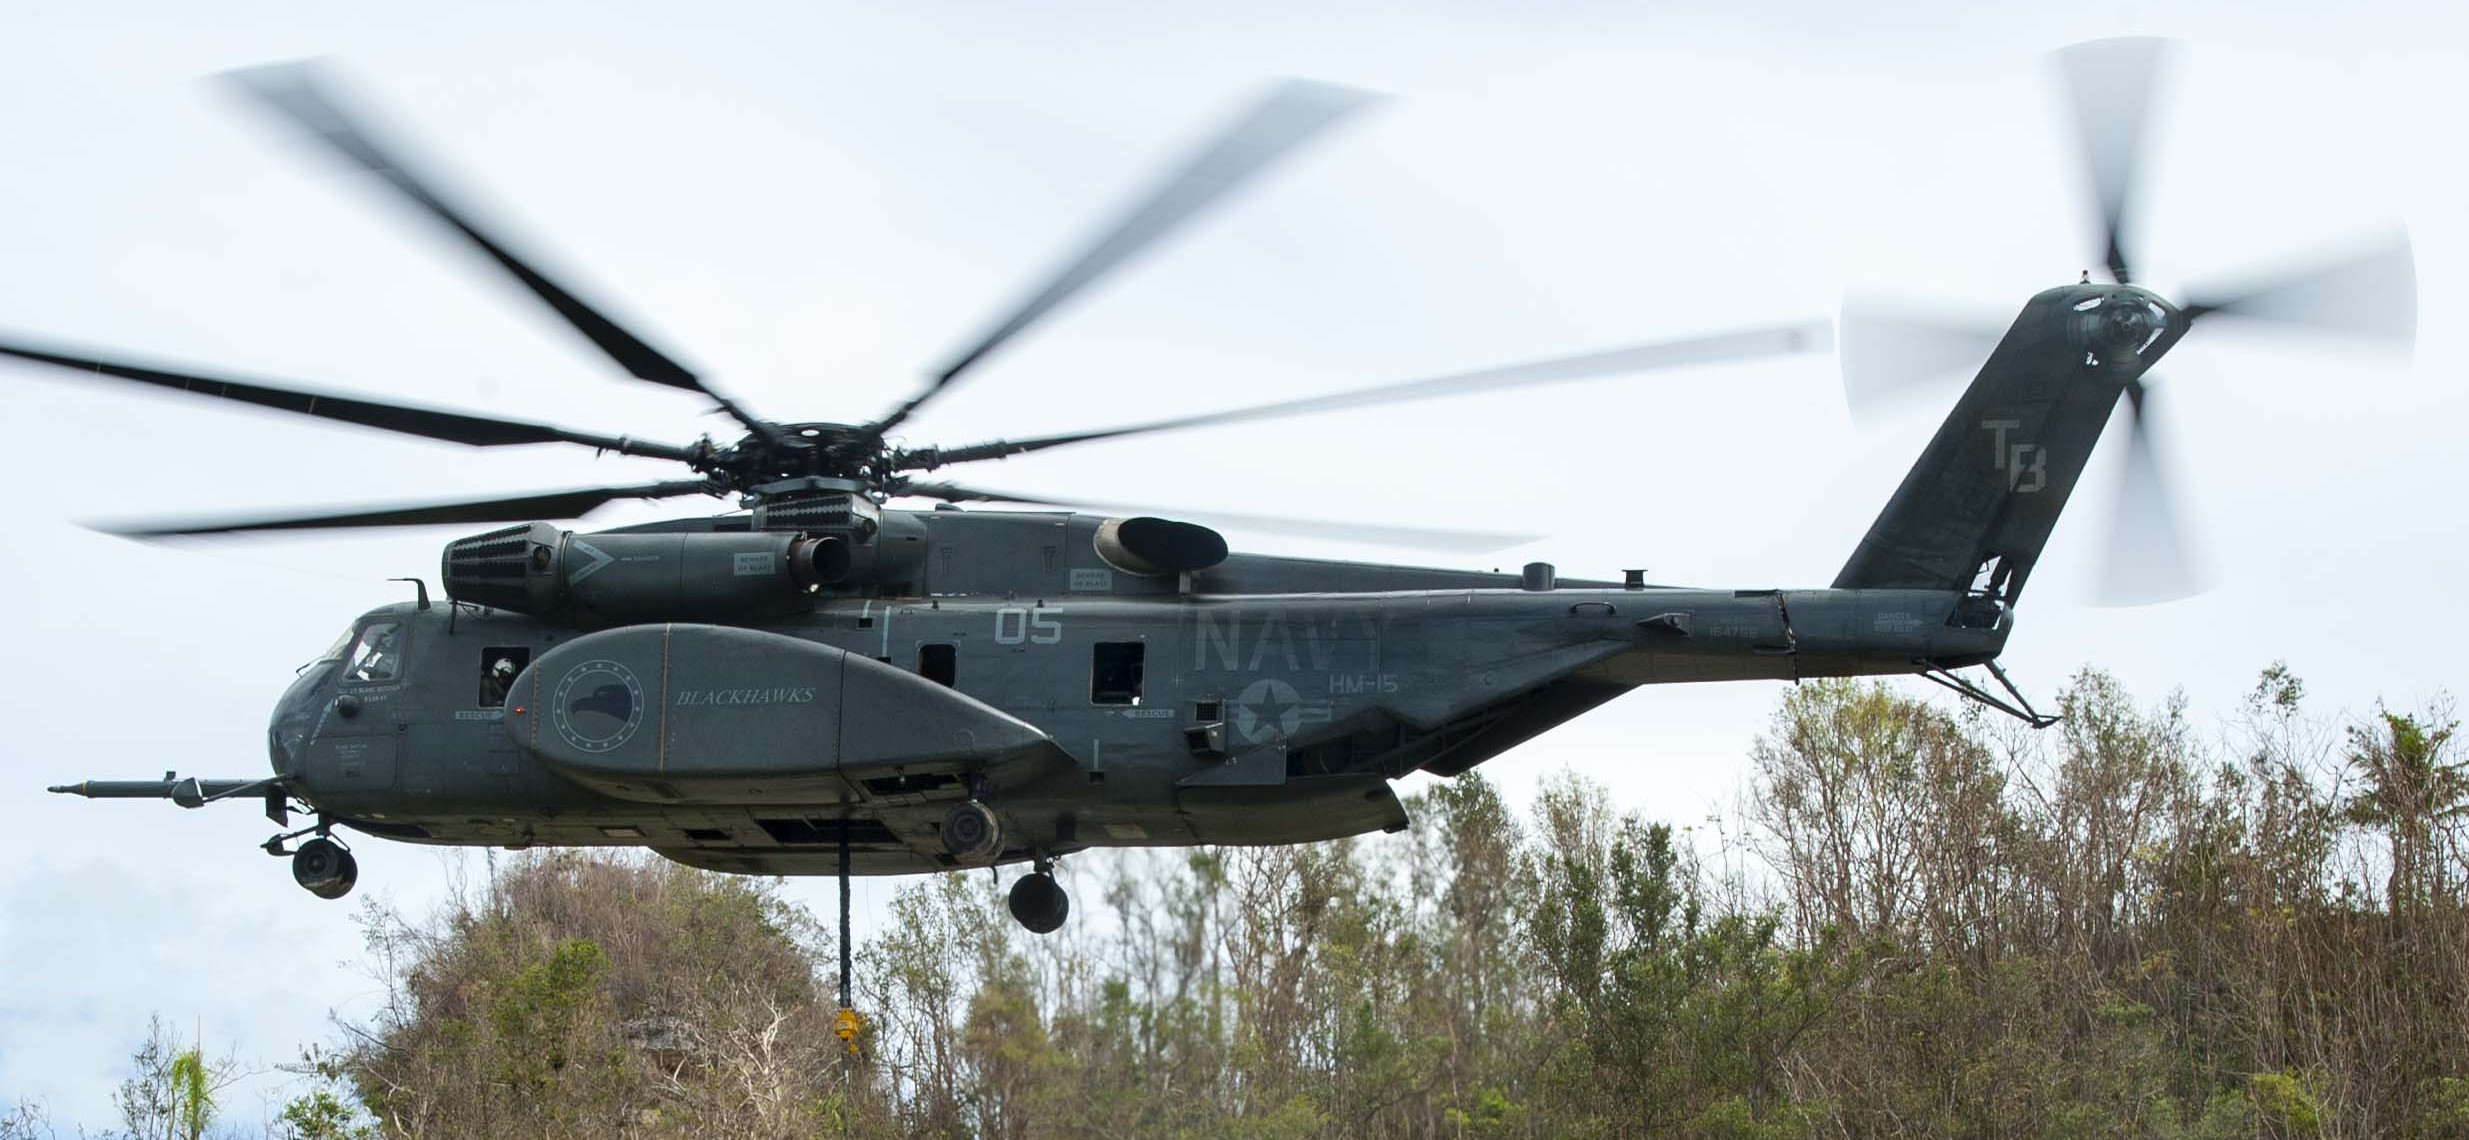 hm-15 blackhawks helicopter mine countermeasures squadron navy mh-53e sea dragon 08